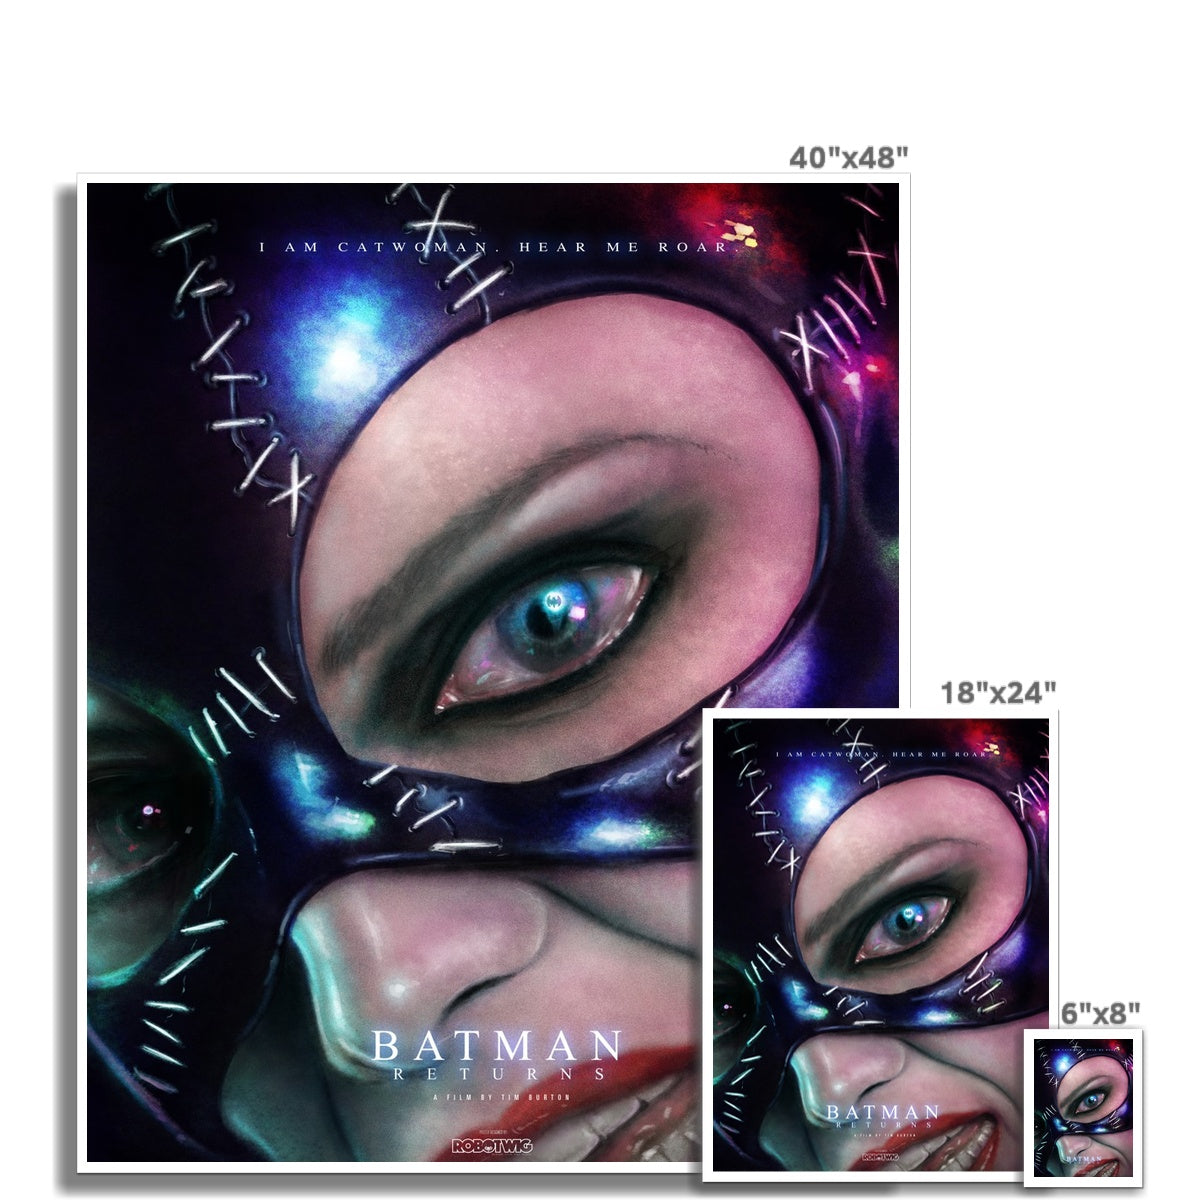 Catwoman Alternate Movie Poster Art Fine Art Print